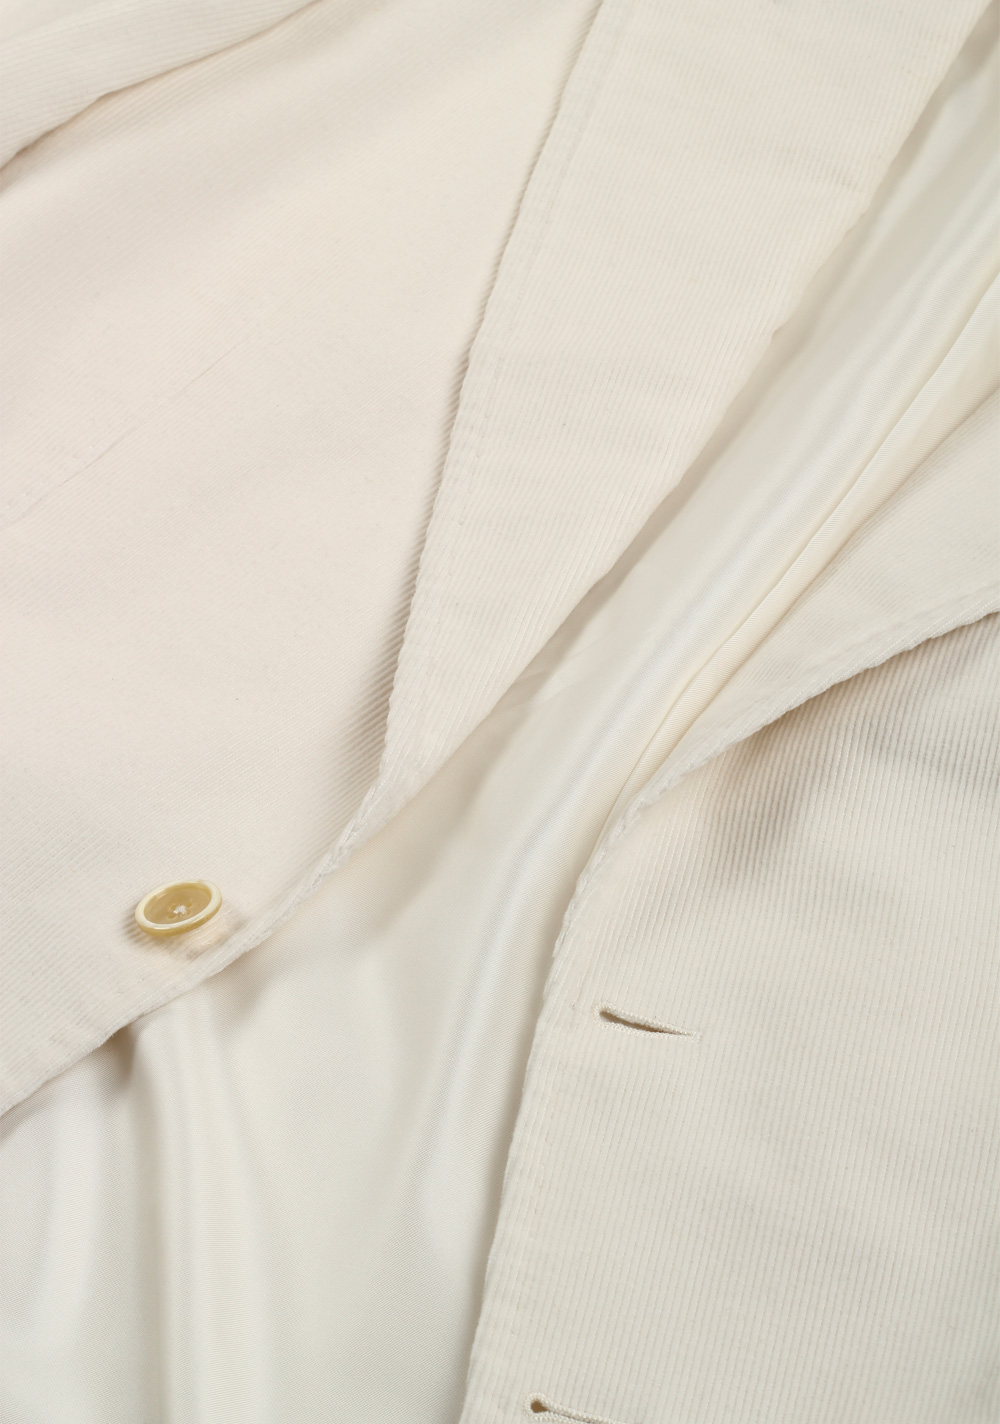 TOM FORD Shelton Off White Sport Coat Size 48 / 38R U.S. In Cotton Linen | Costume Limité